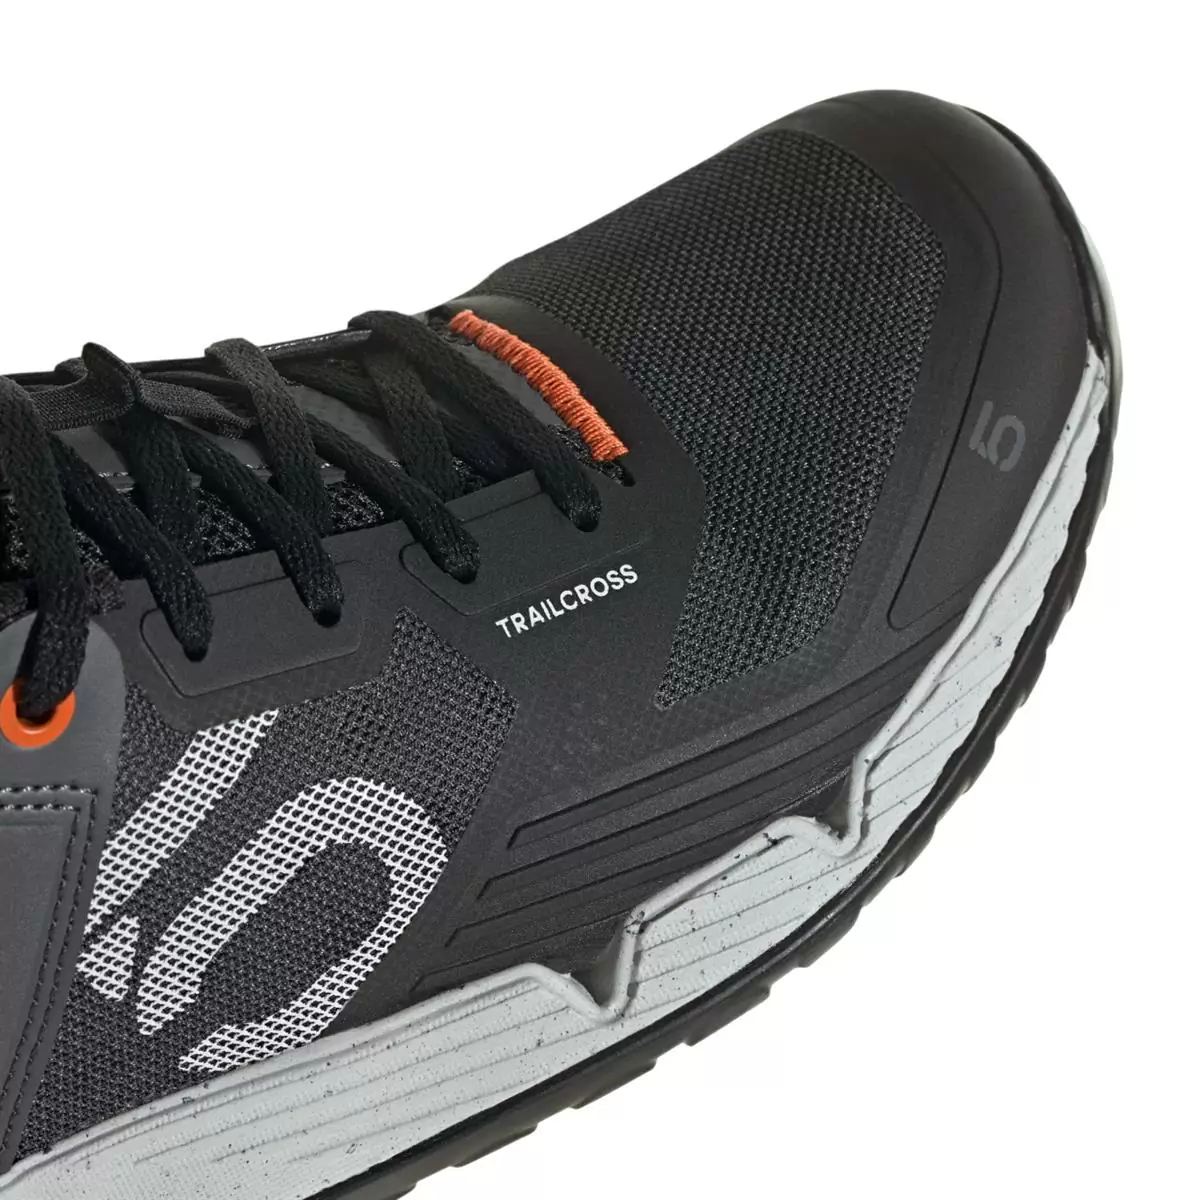 5.10 Trailcross XT Flat MTB Shoes Black/Grey Size 45 #6